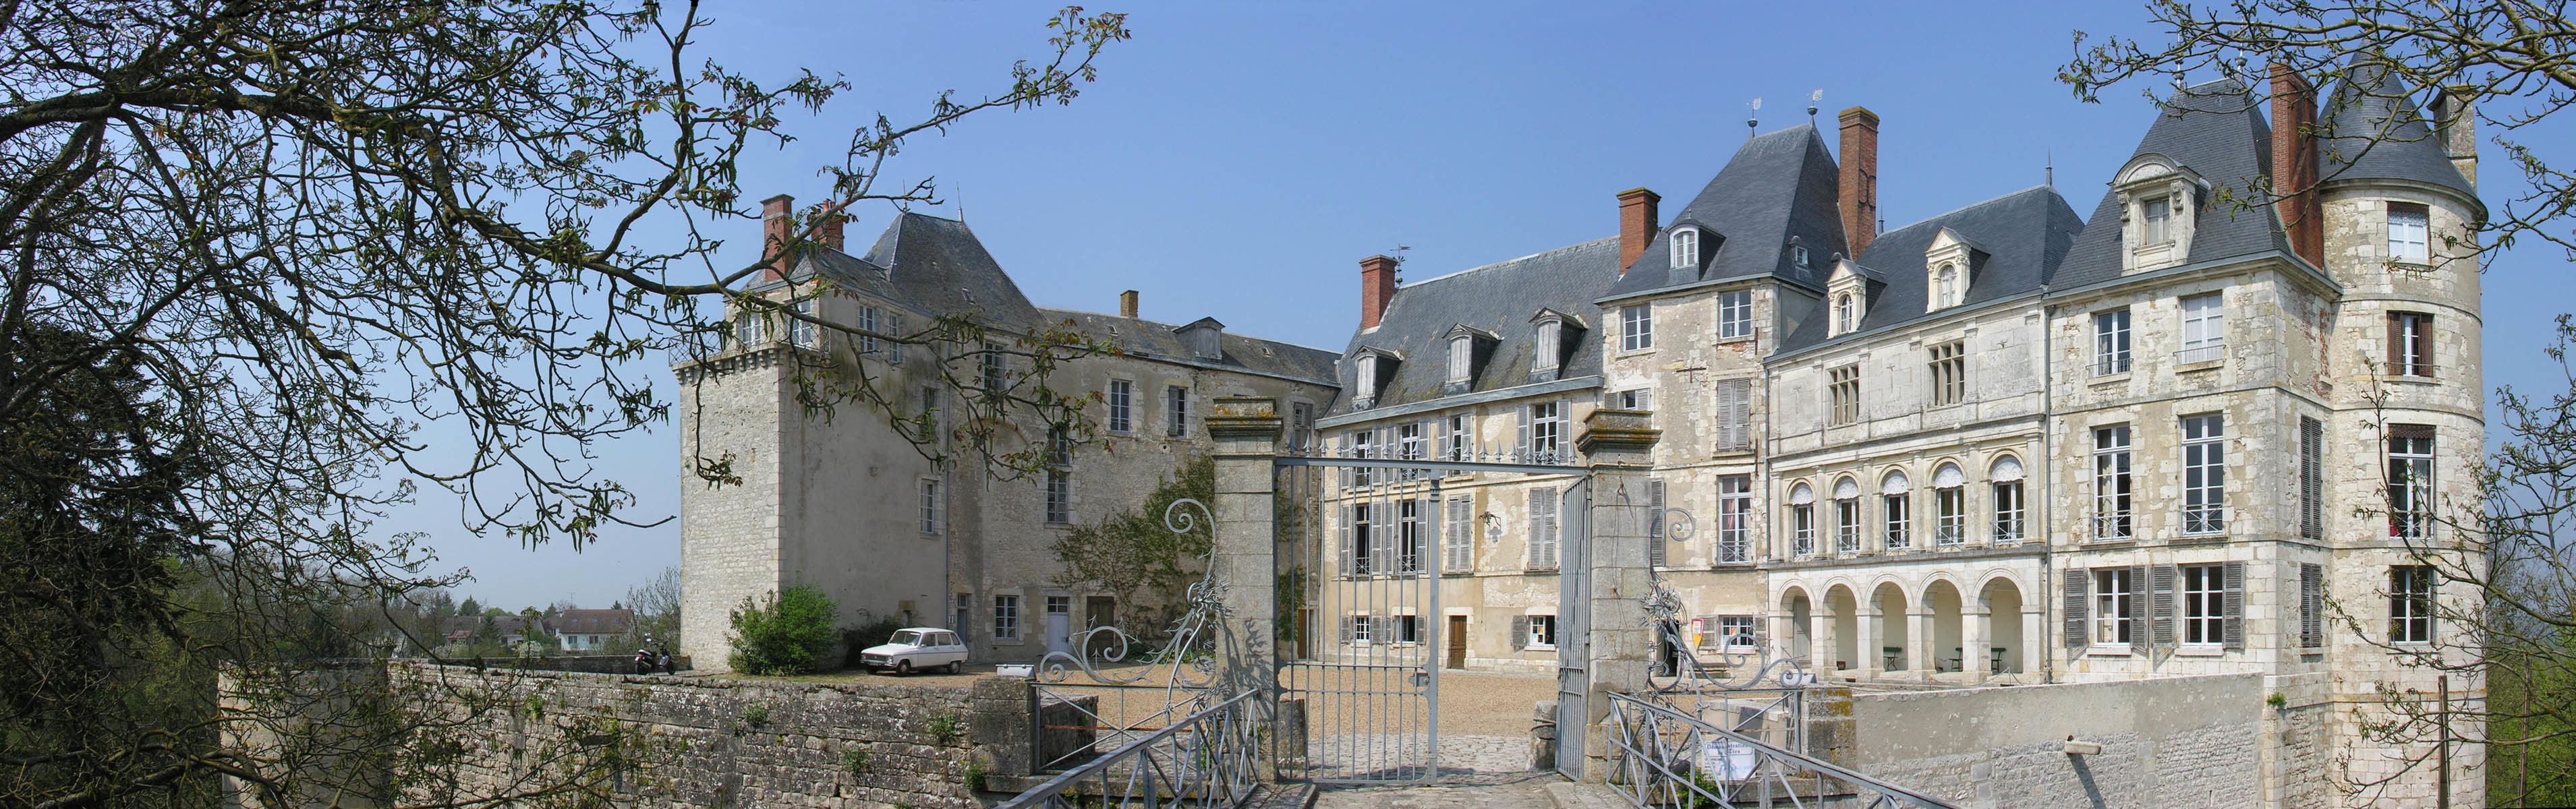 Castle of Saint Dye sur Loire - France.jpg